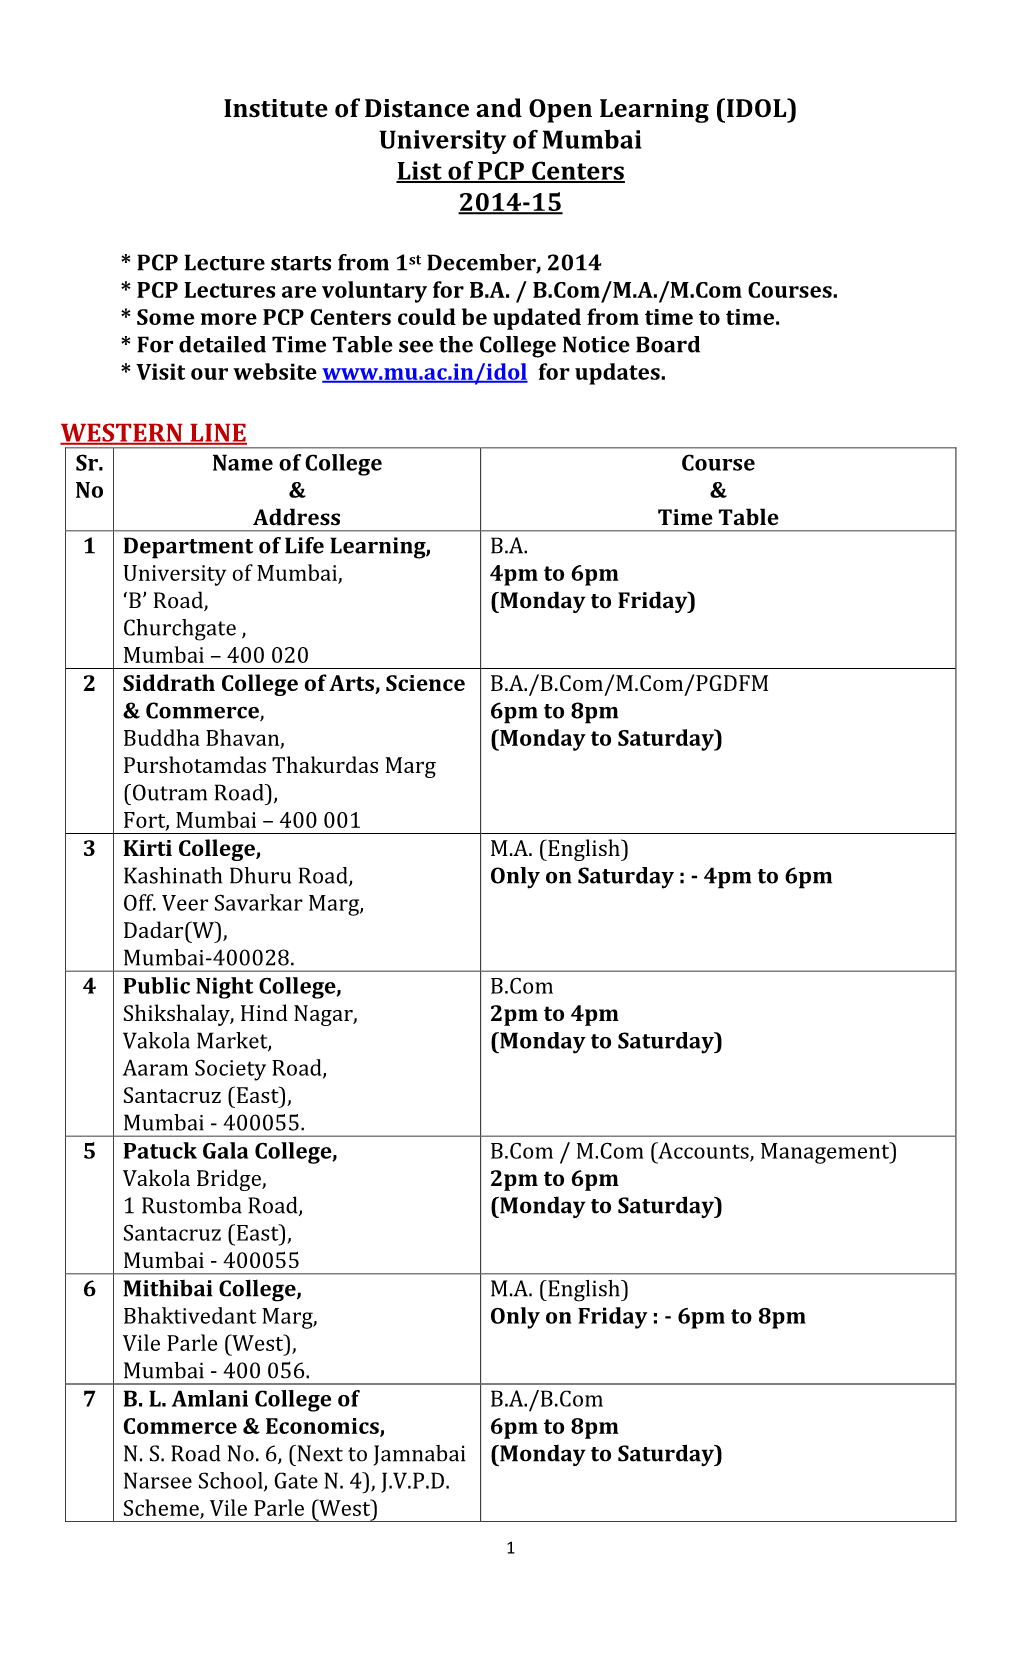 (IDOL) University of Mumbai List of PCP Centers 2014-15 WESTERN